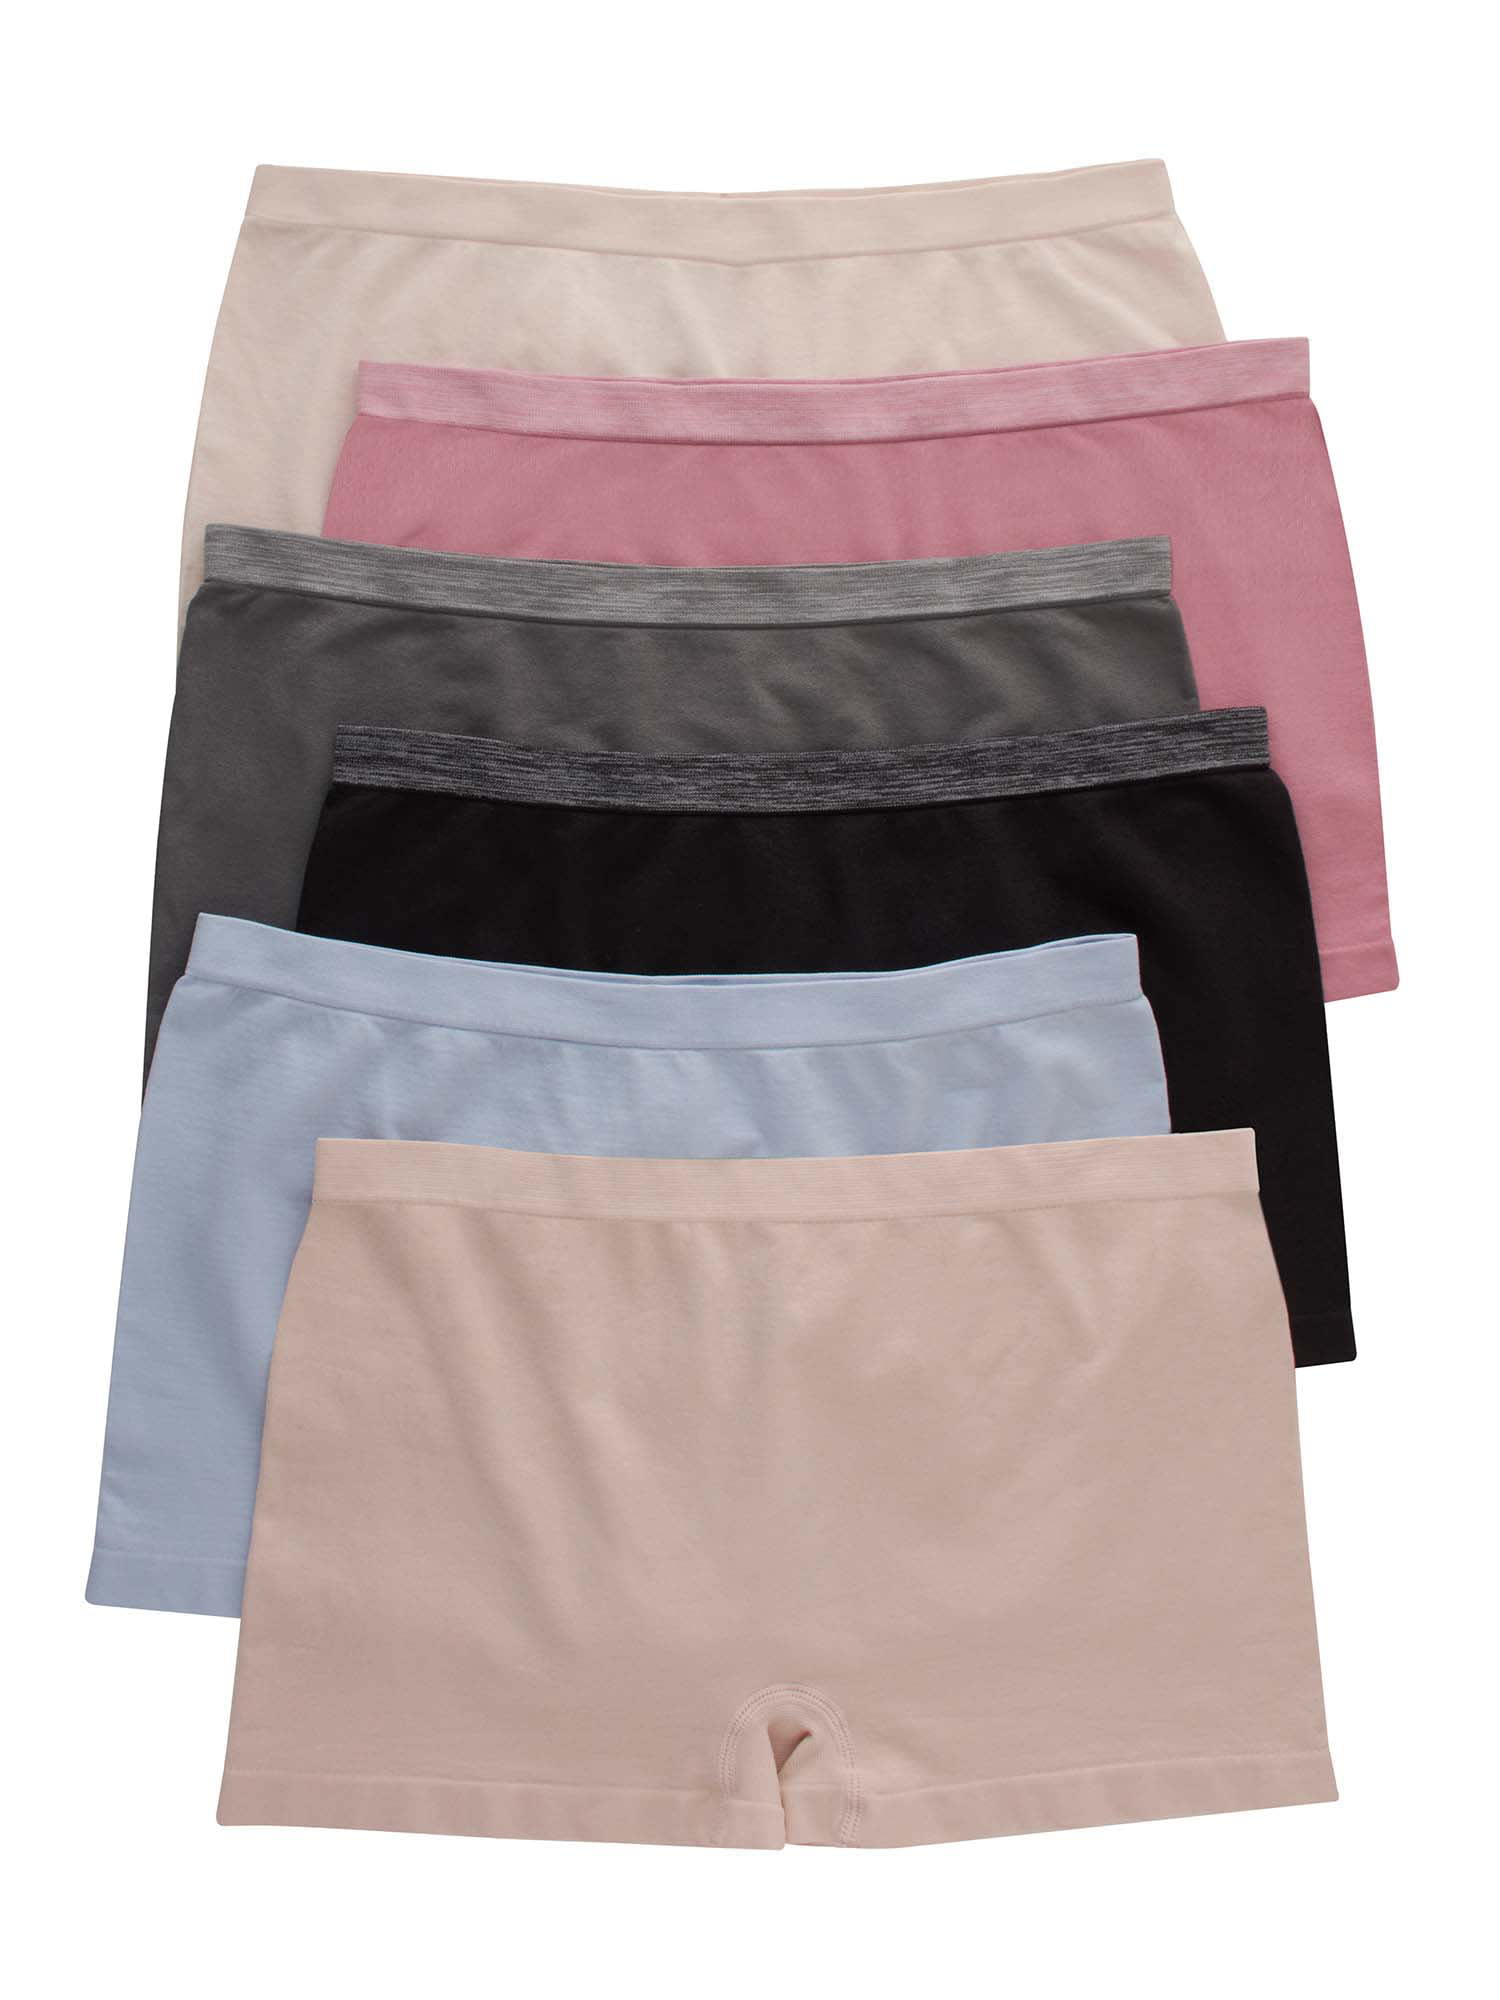 Hanes Women's Comfort Flex Fit Seamless Boyshort Underwear, 6-Pack -  DroneUp Delivery